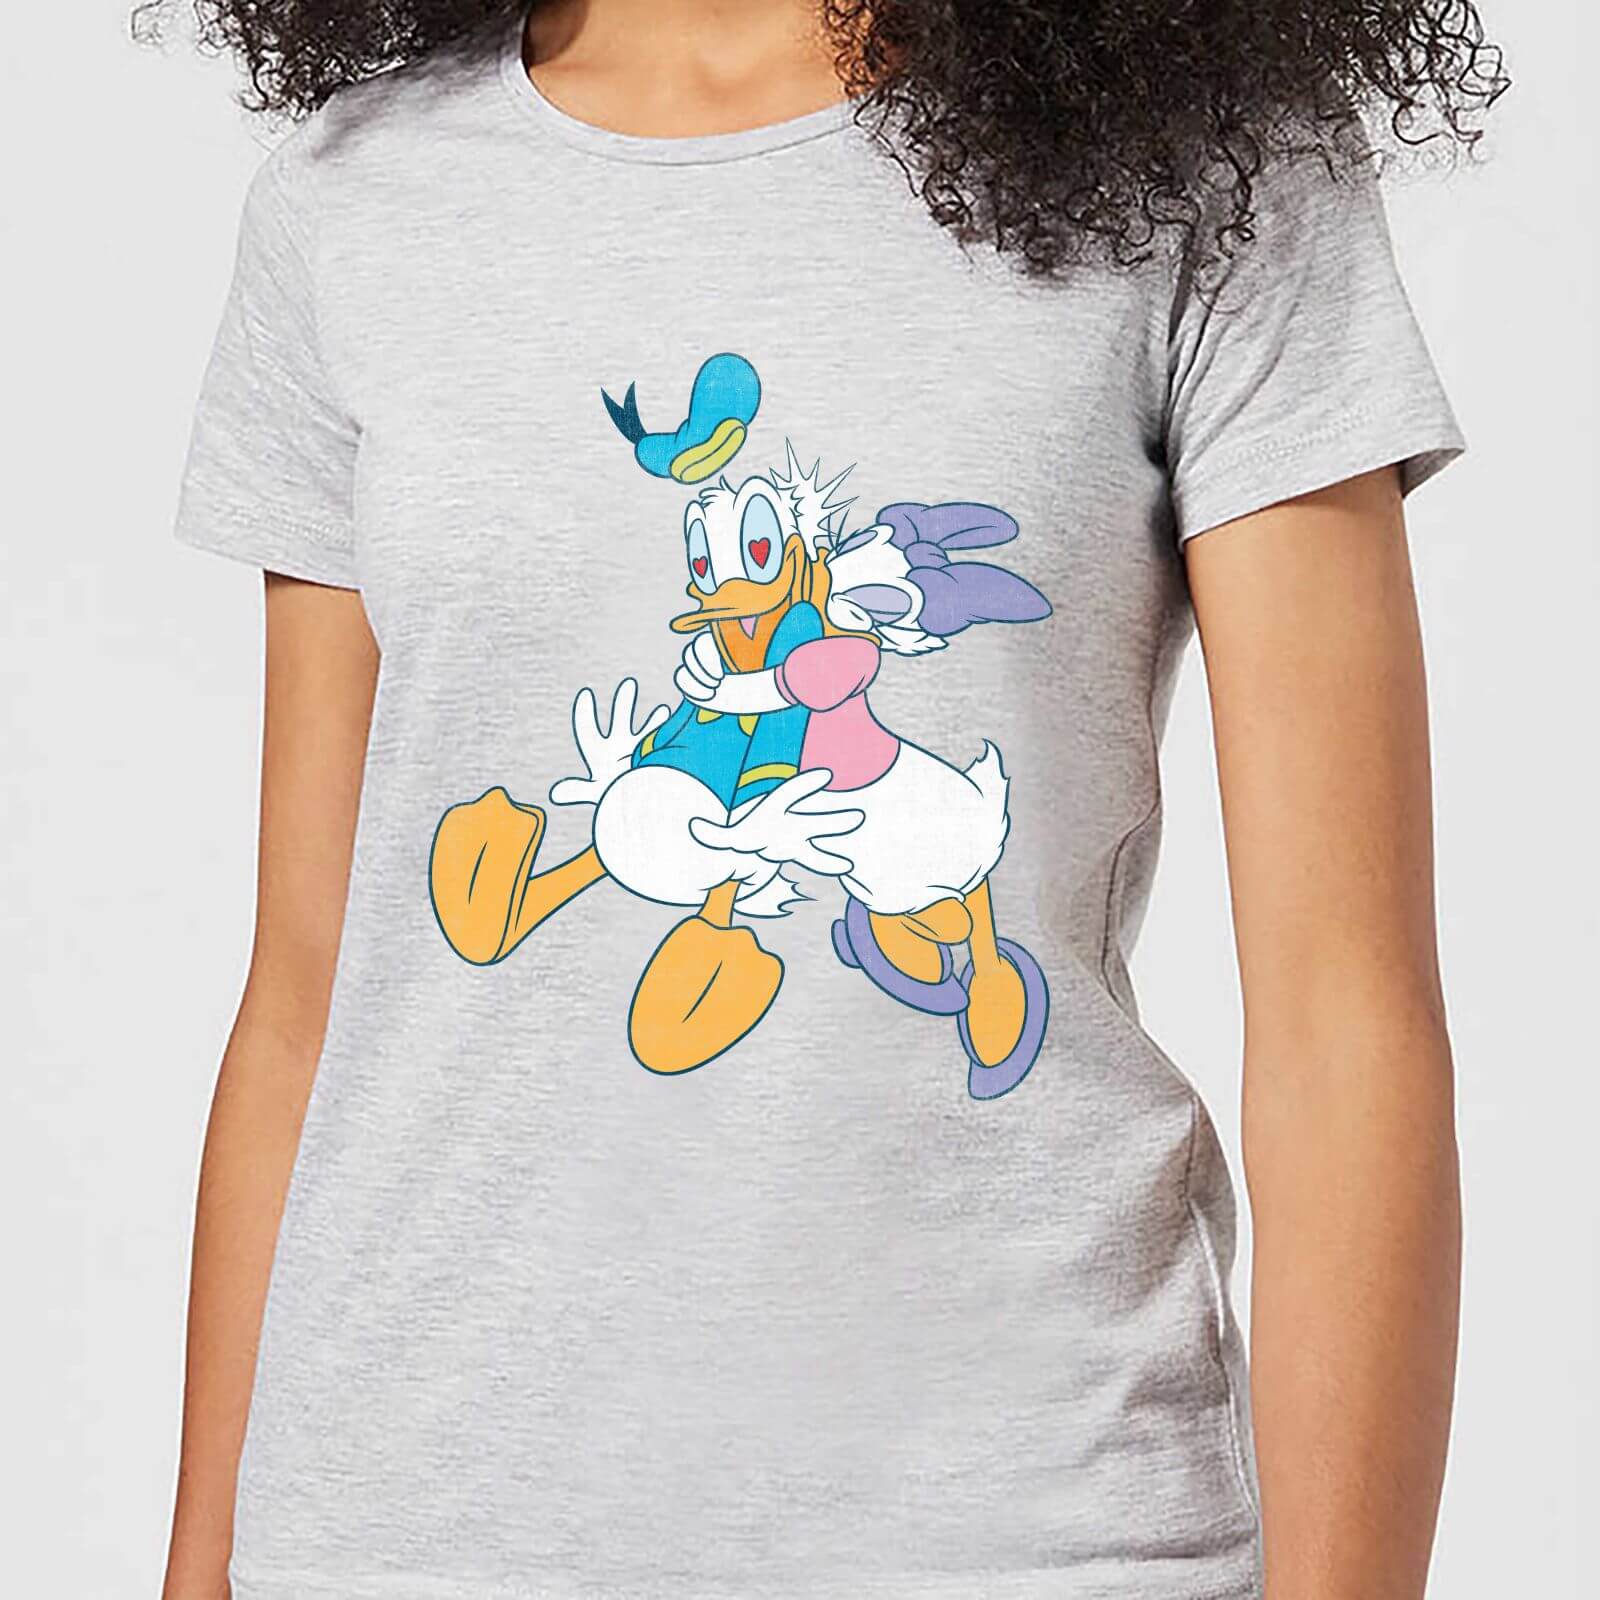 Disney Mickey Mouse Donald Daisy Kiss Women's T-Shirt - Grey - XL